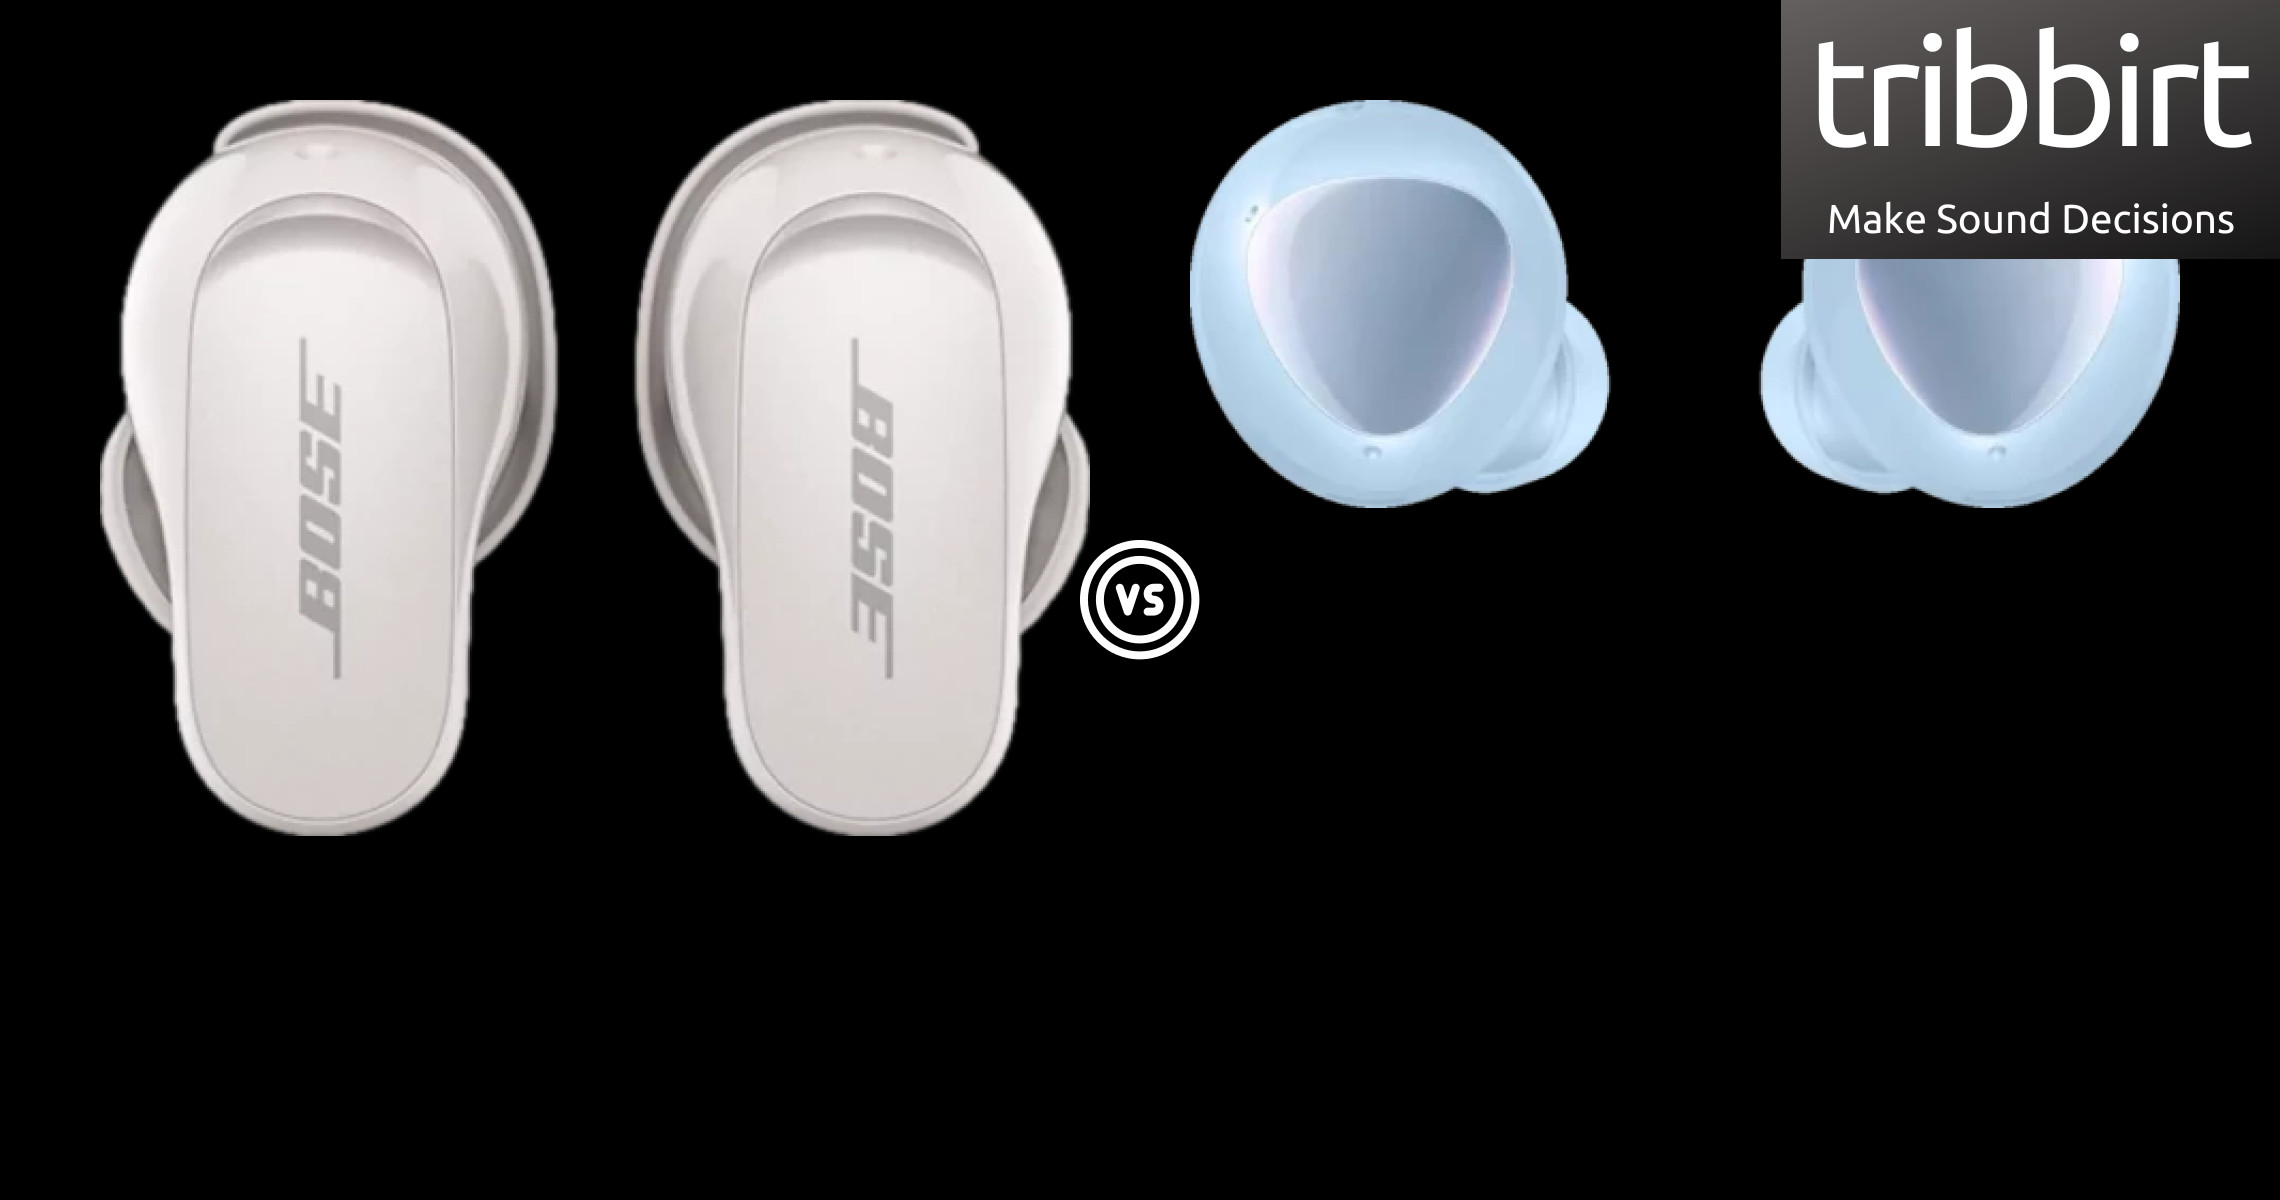  Samsung Galaxy Buds Plus Vs. Bose Quietcomfort Earbuds 2